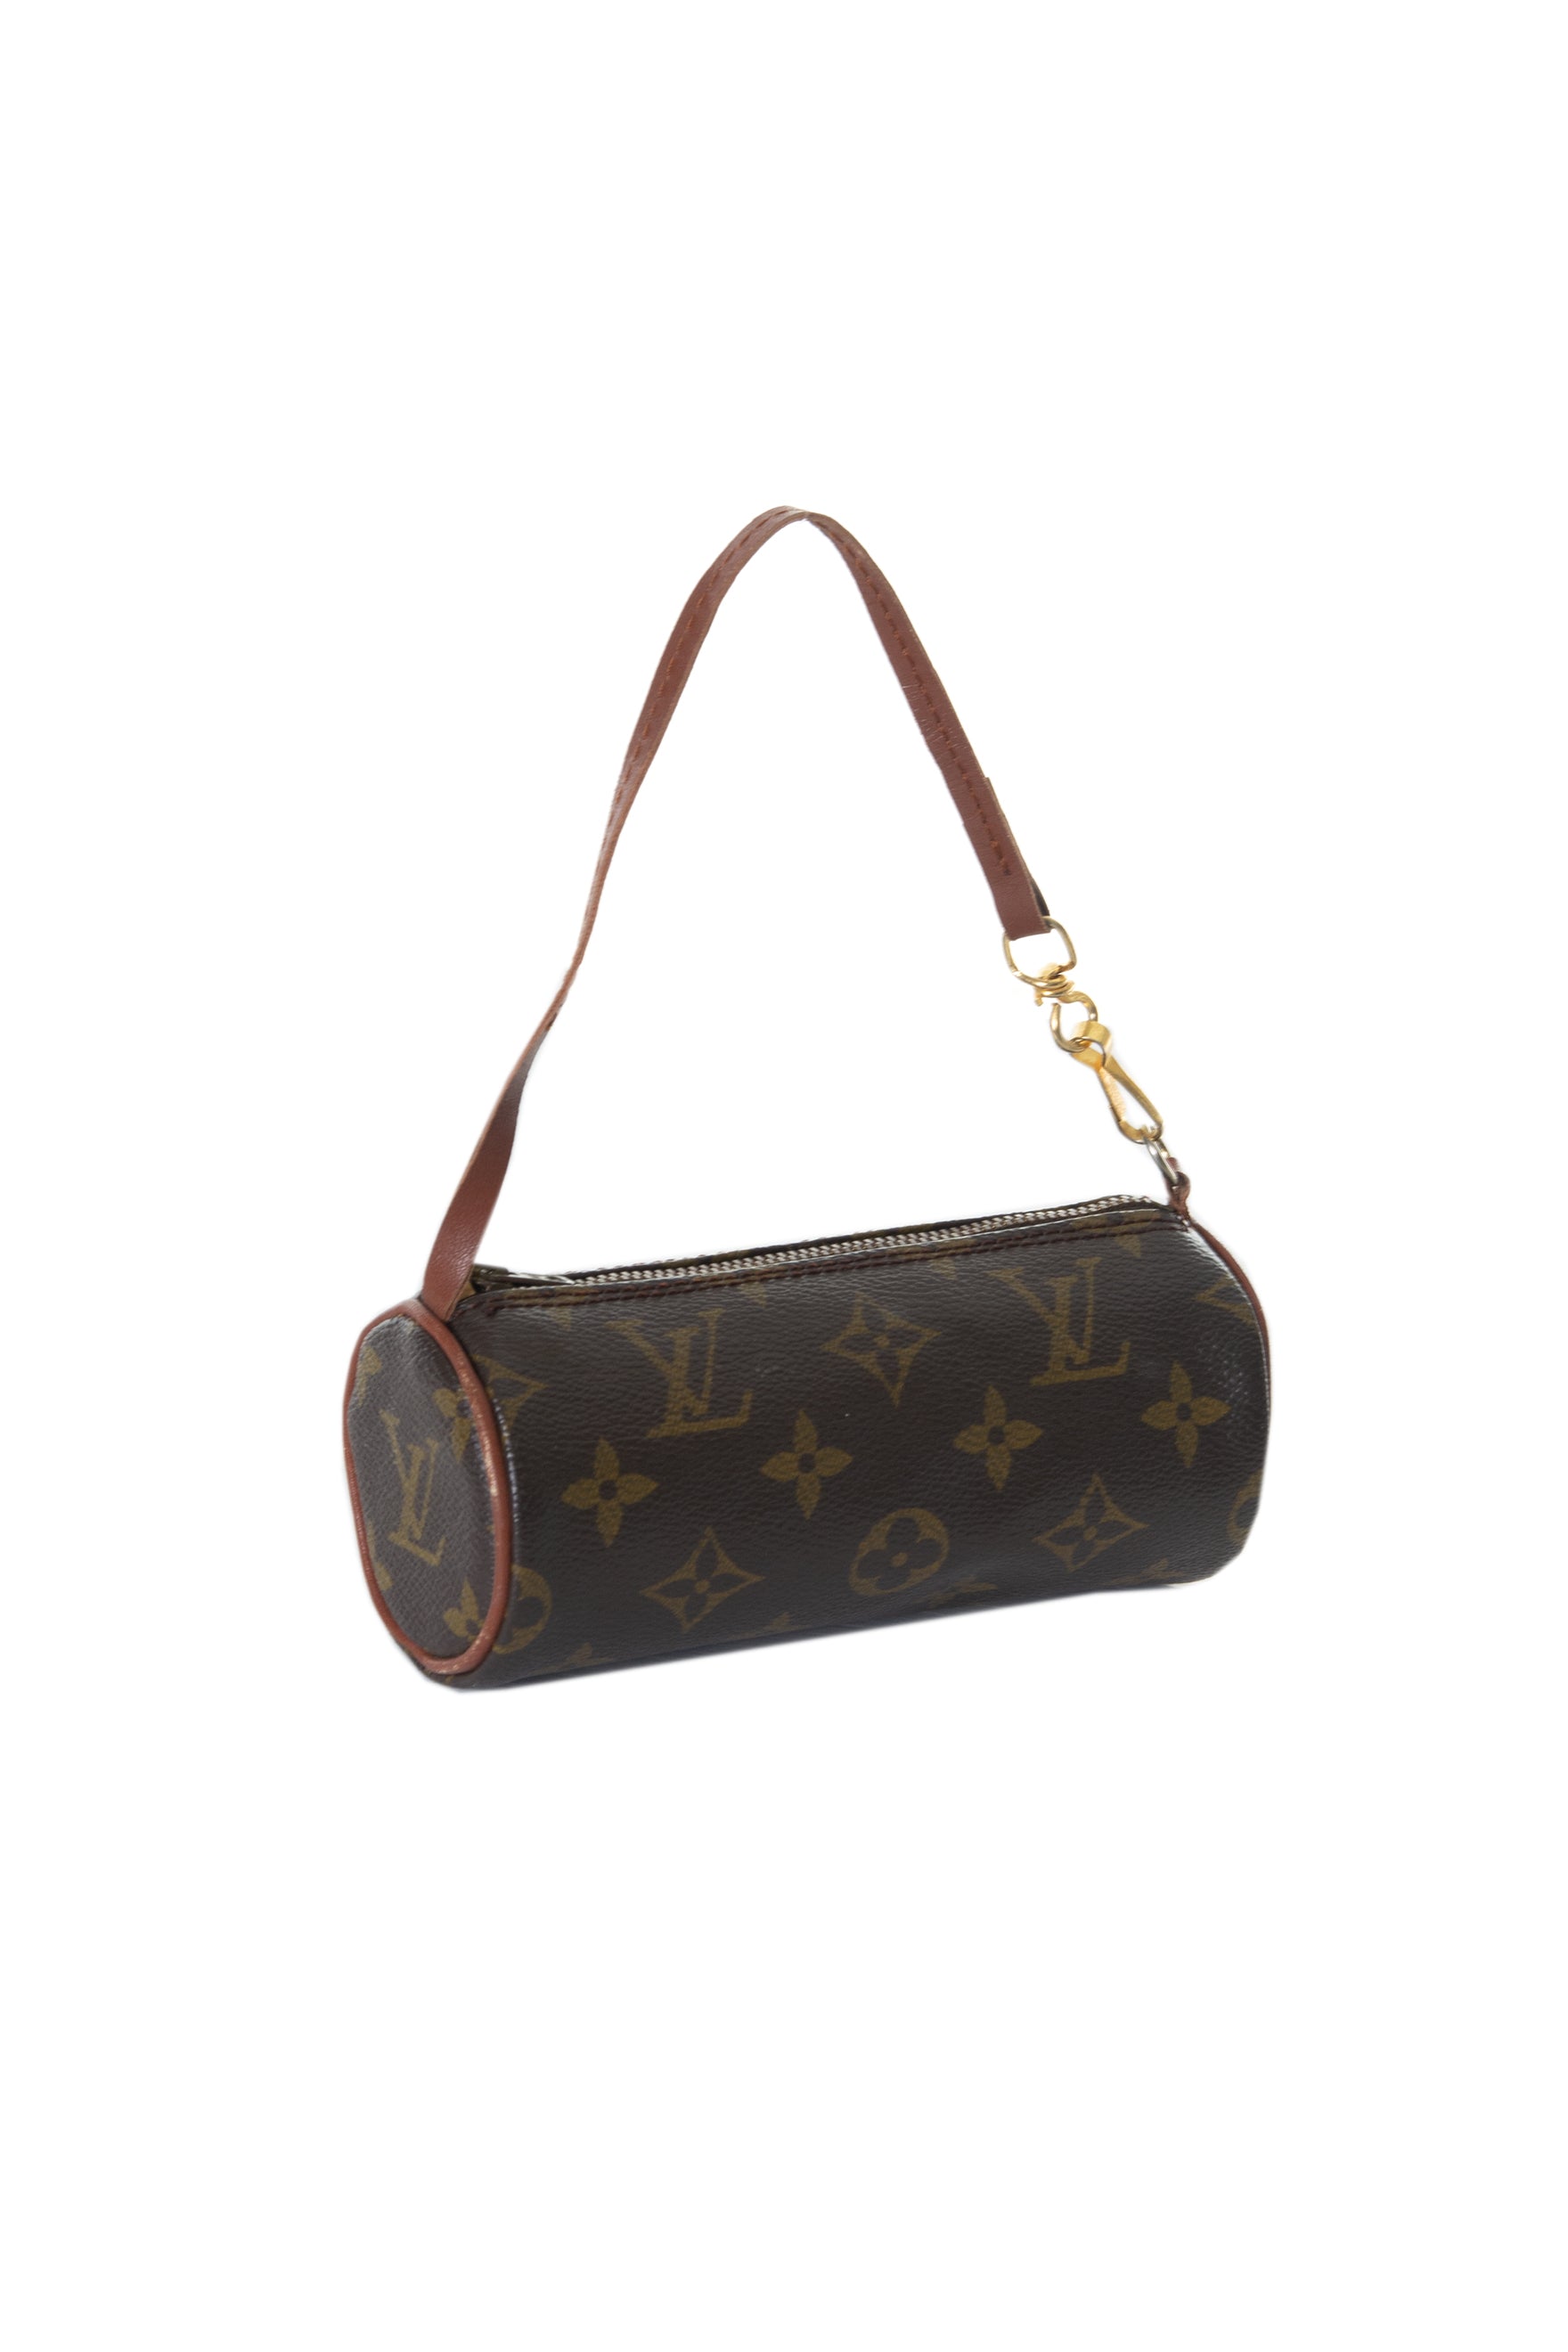 Louis Vuitton Mini Papillon Bag - 2 For Sale on 1stDibs